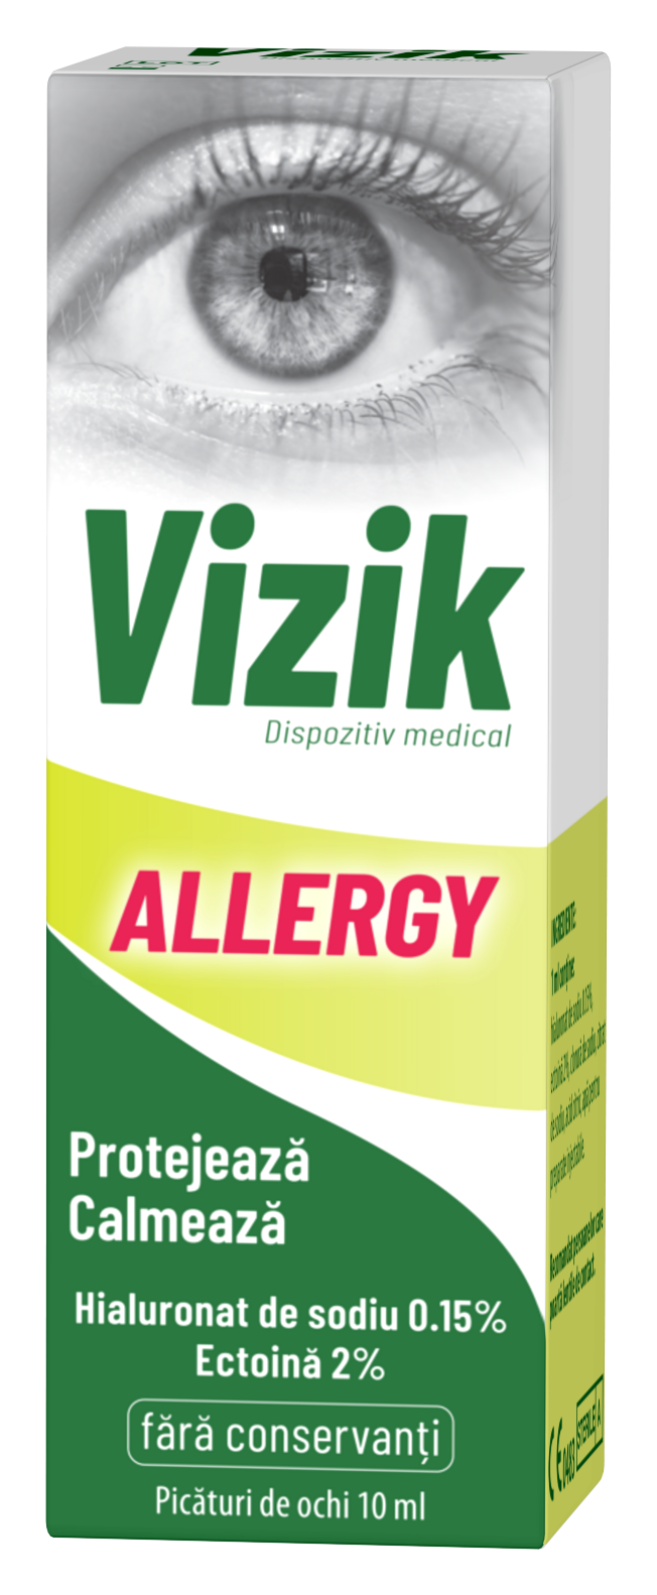 Alergii și congestii - Vizik Allergy picaturi ochi 10 ml (Zdrovit), epastila.ro